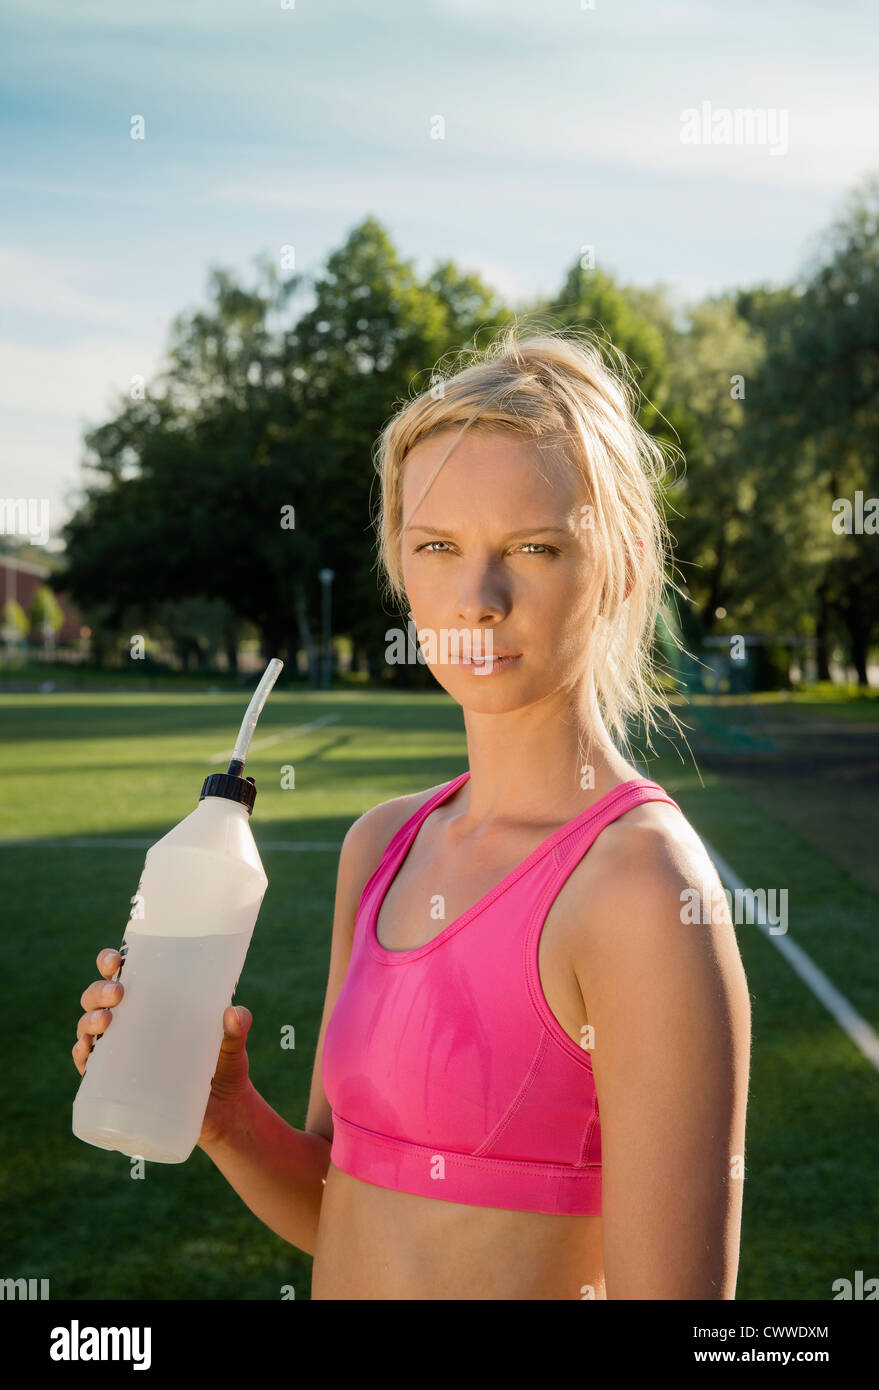 Runner drinking water in park Stock Photo